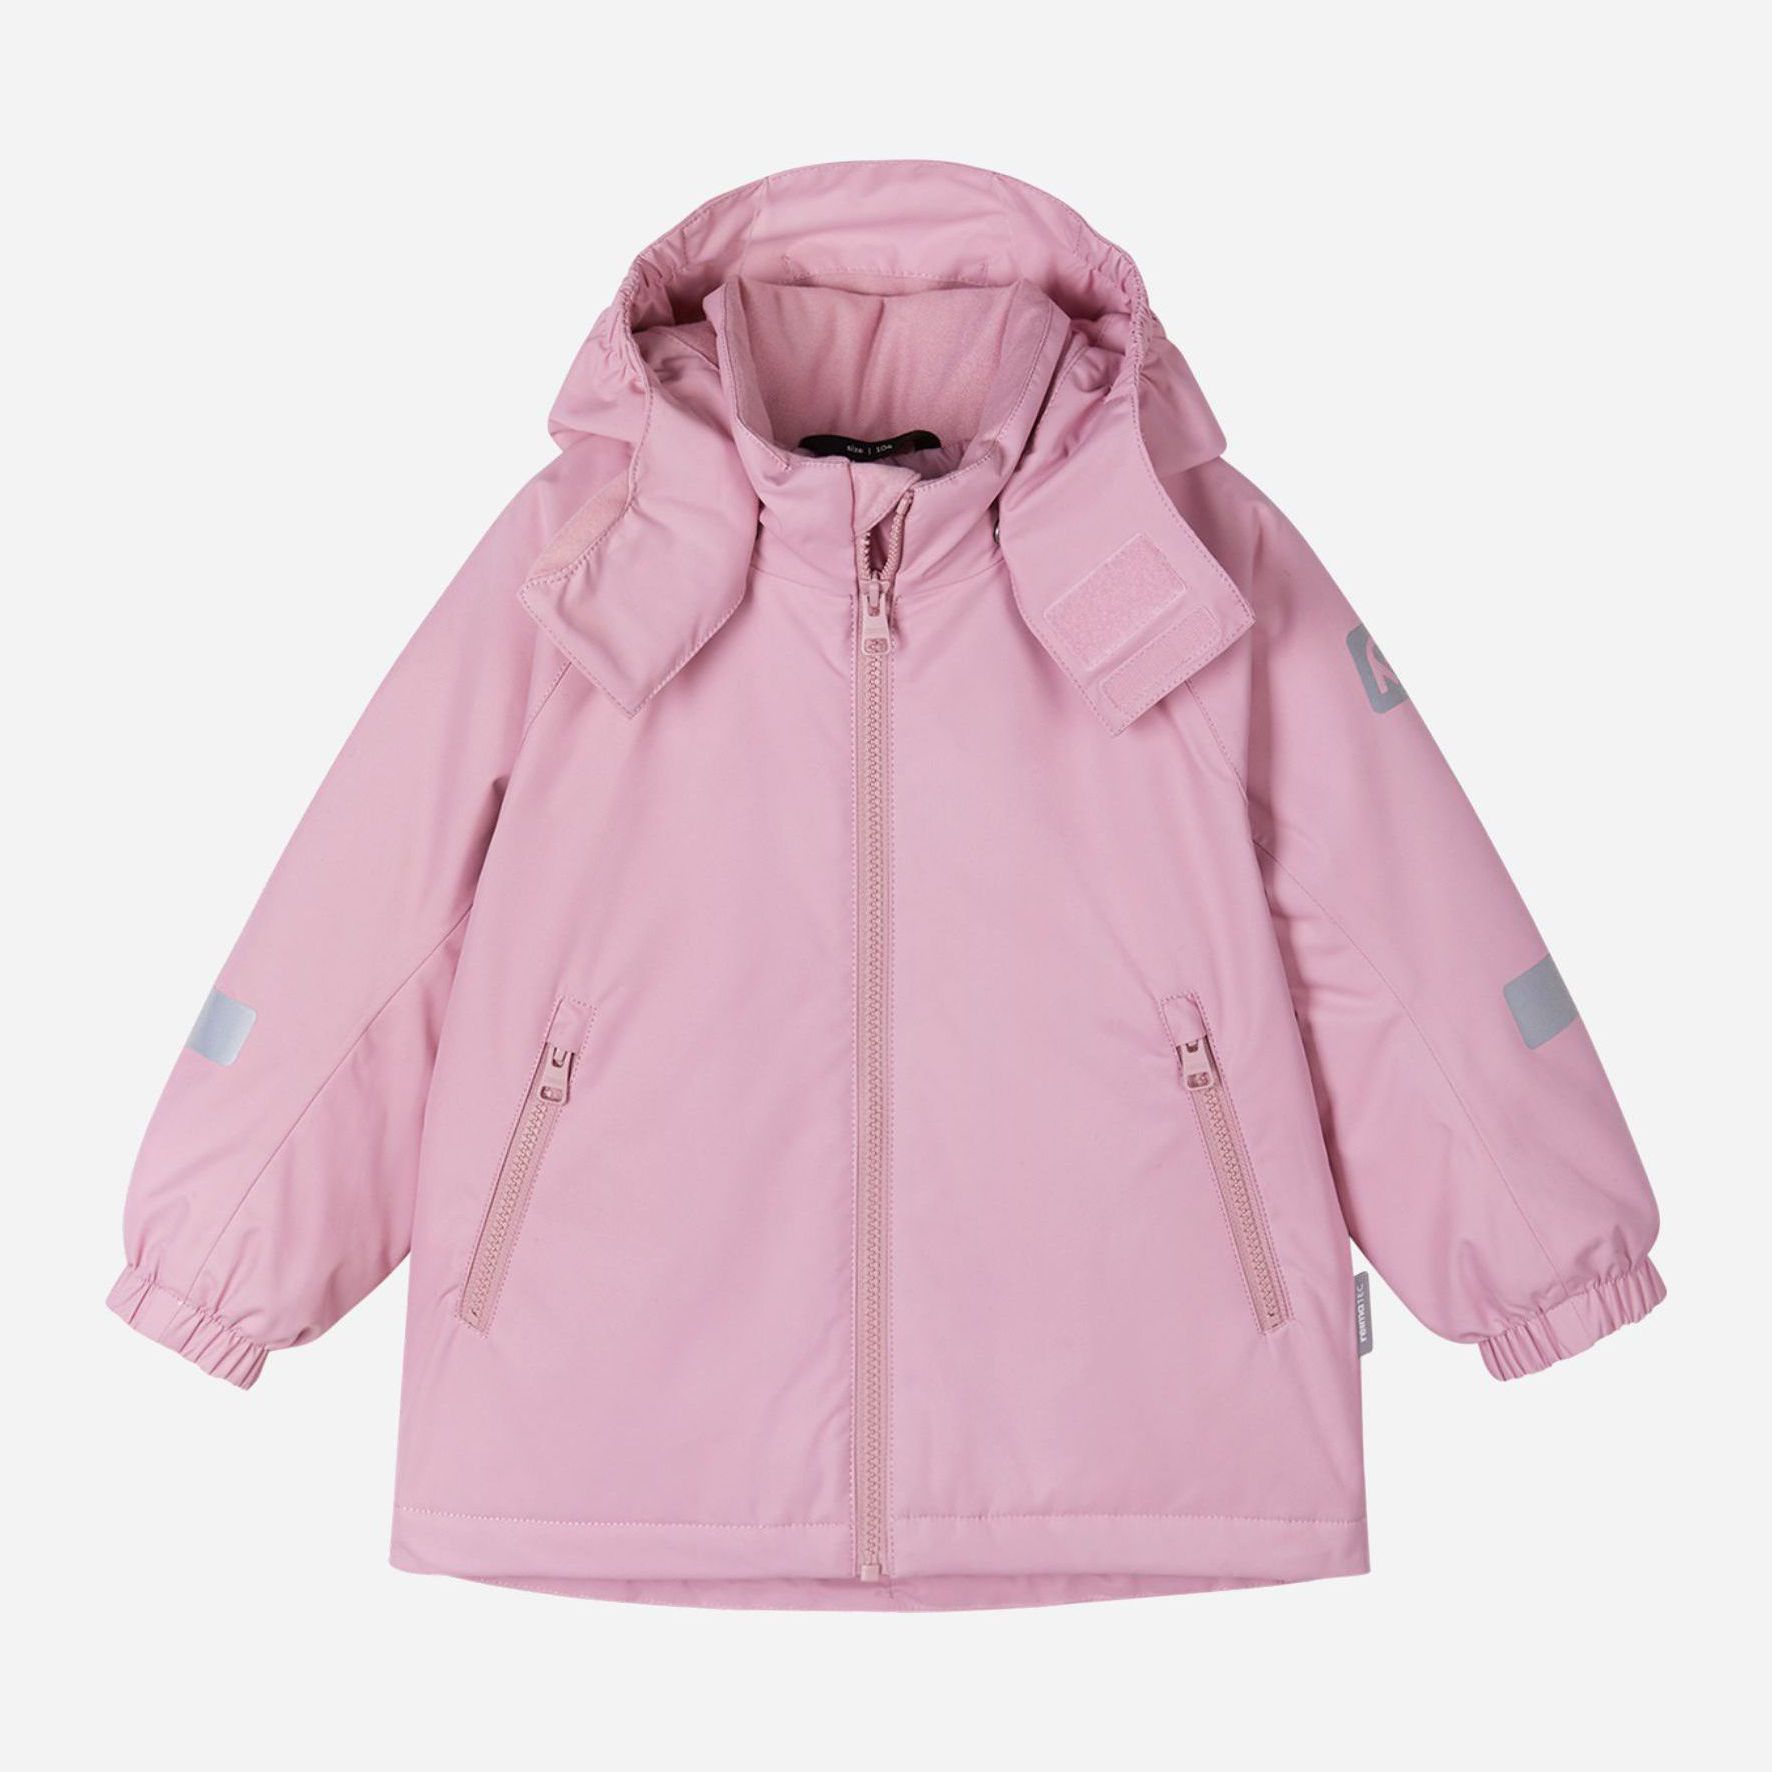 Акция на Дитяча зимова термо куртка для дівчинки Reima Reili 521659A-4550 122 см от Rozetka